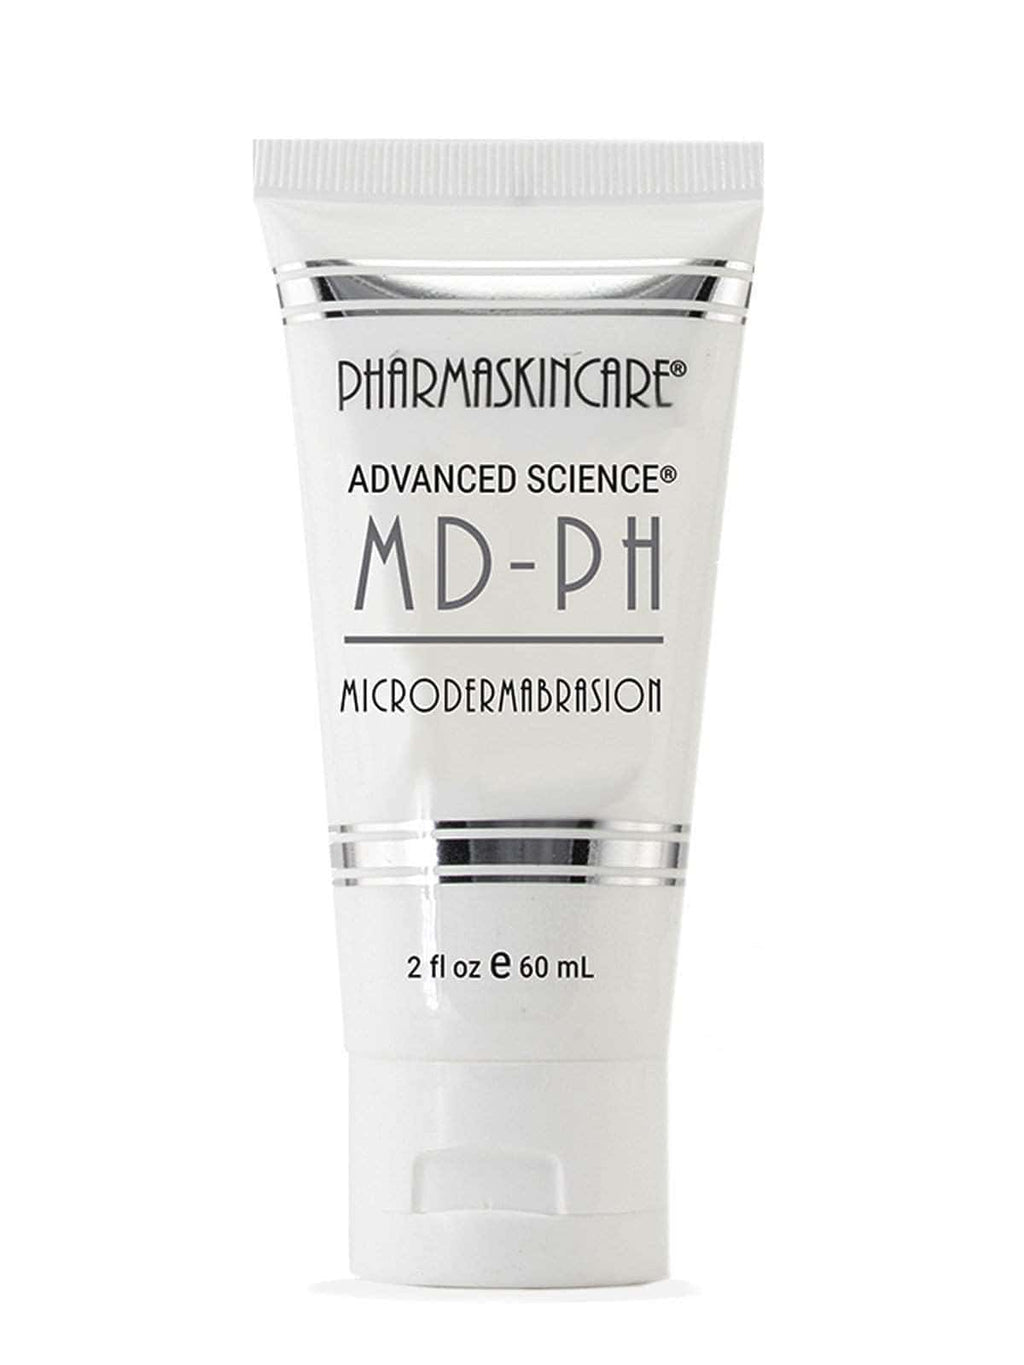 MD PH Microdermabrasion - Pharmaskincare